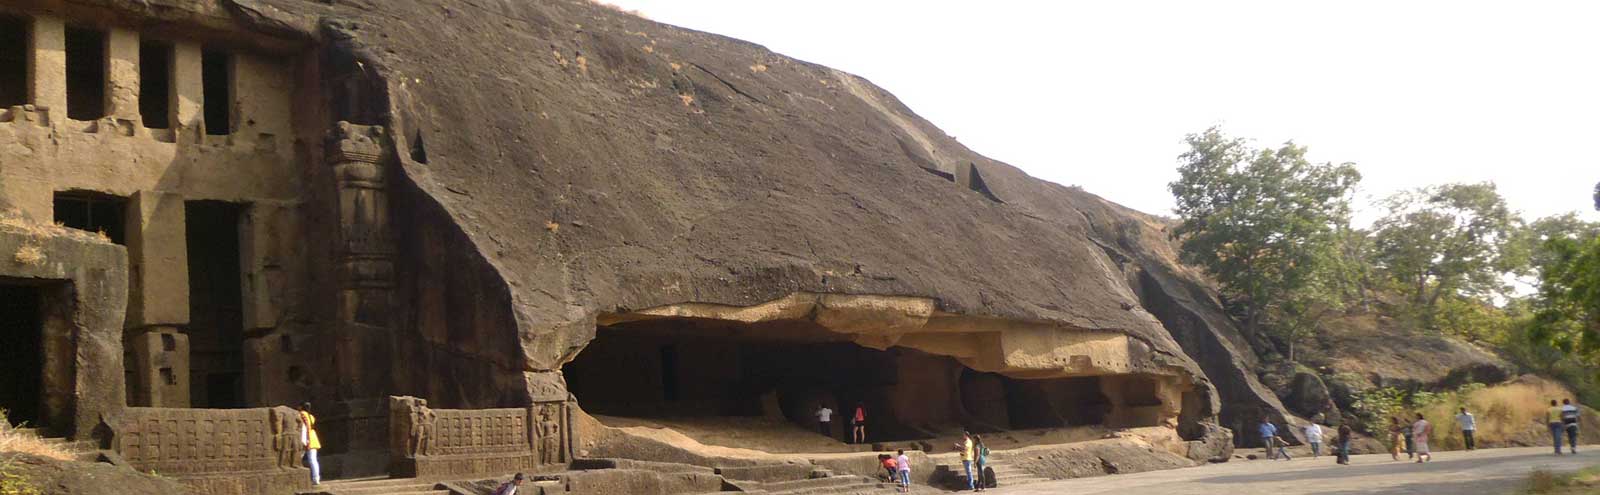 Kanheri-caves